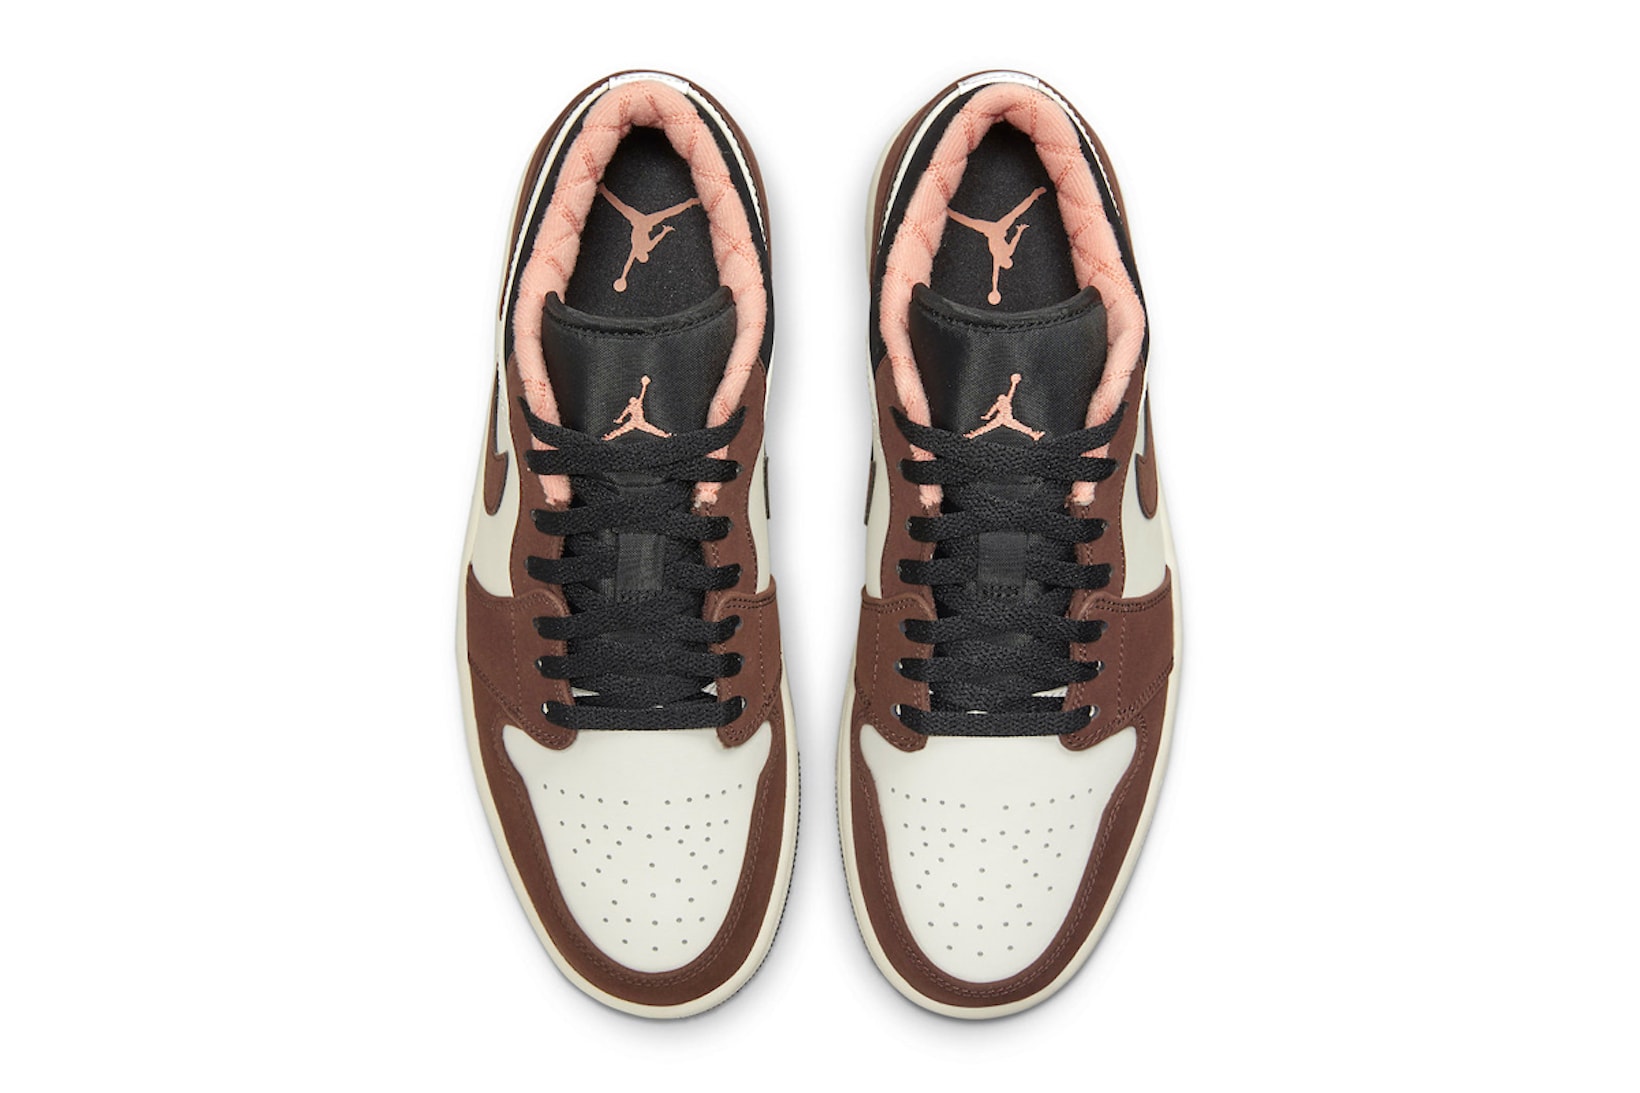 Nike Air Jordan 1 Low AJ1 Mocha Brown Pink White Sneakers Footwear Shoes Kicks